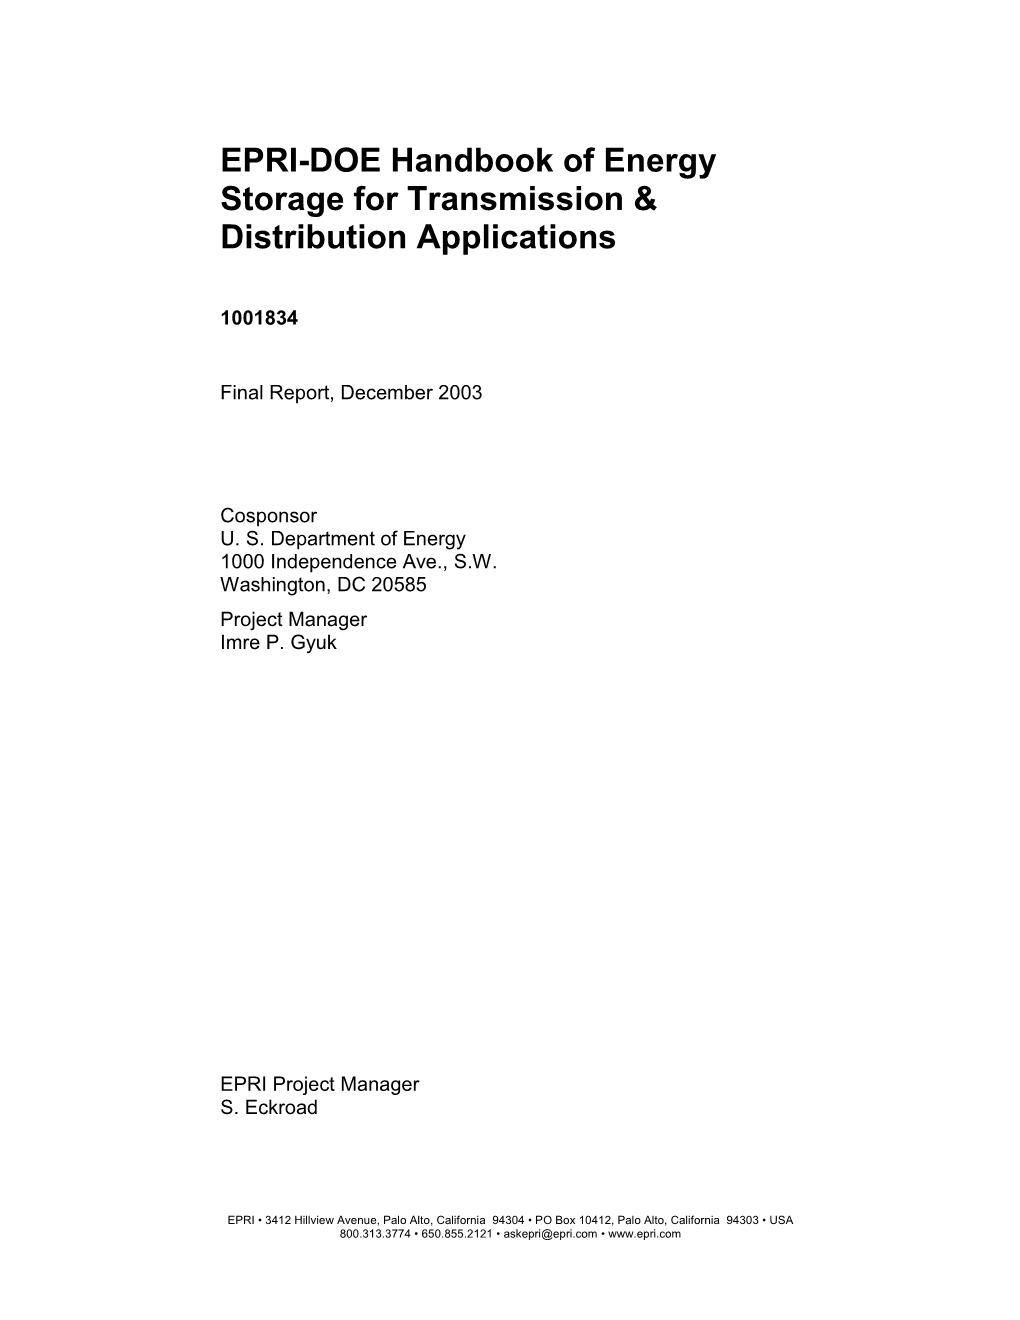 EPRI-DOE Handbook of Energy Storage for Transmission & Distribution Applications